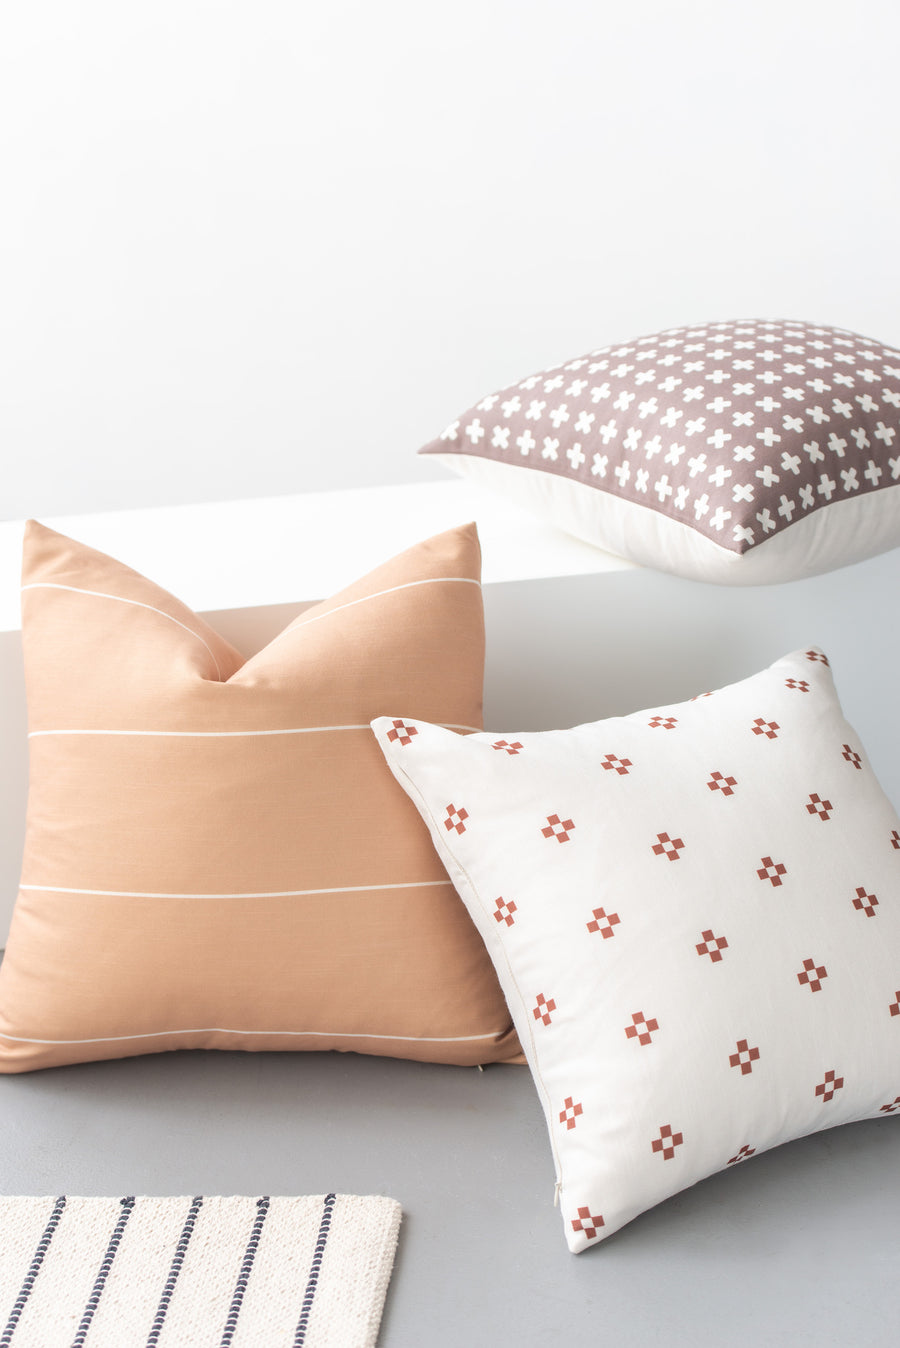 Modern Boho Pillow Cover, Brown, X Dots, 18